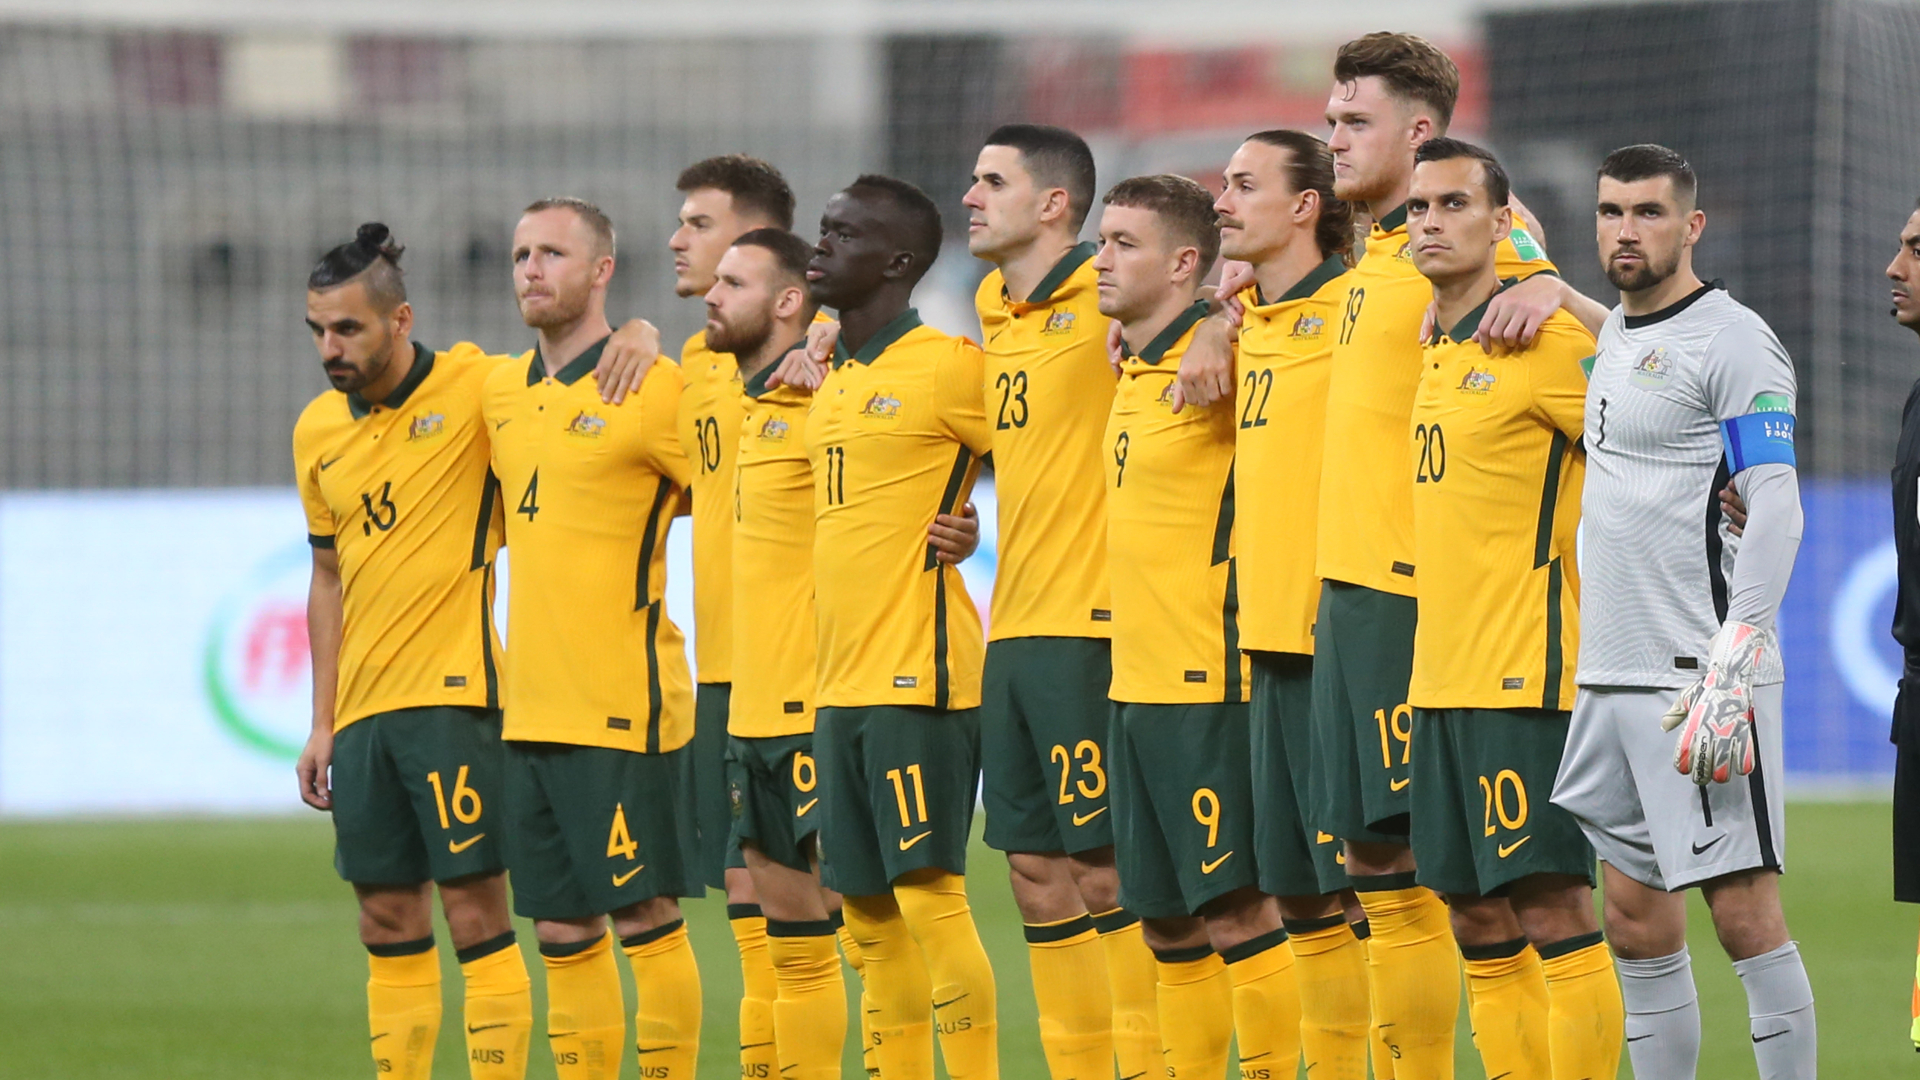 Socceroos vs Saudi Arabia: When, where, team news and how to watch in Australia